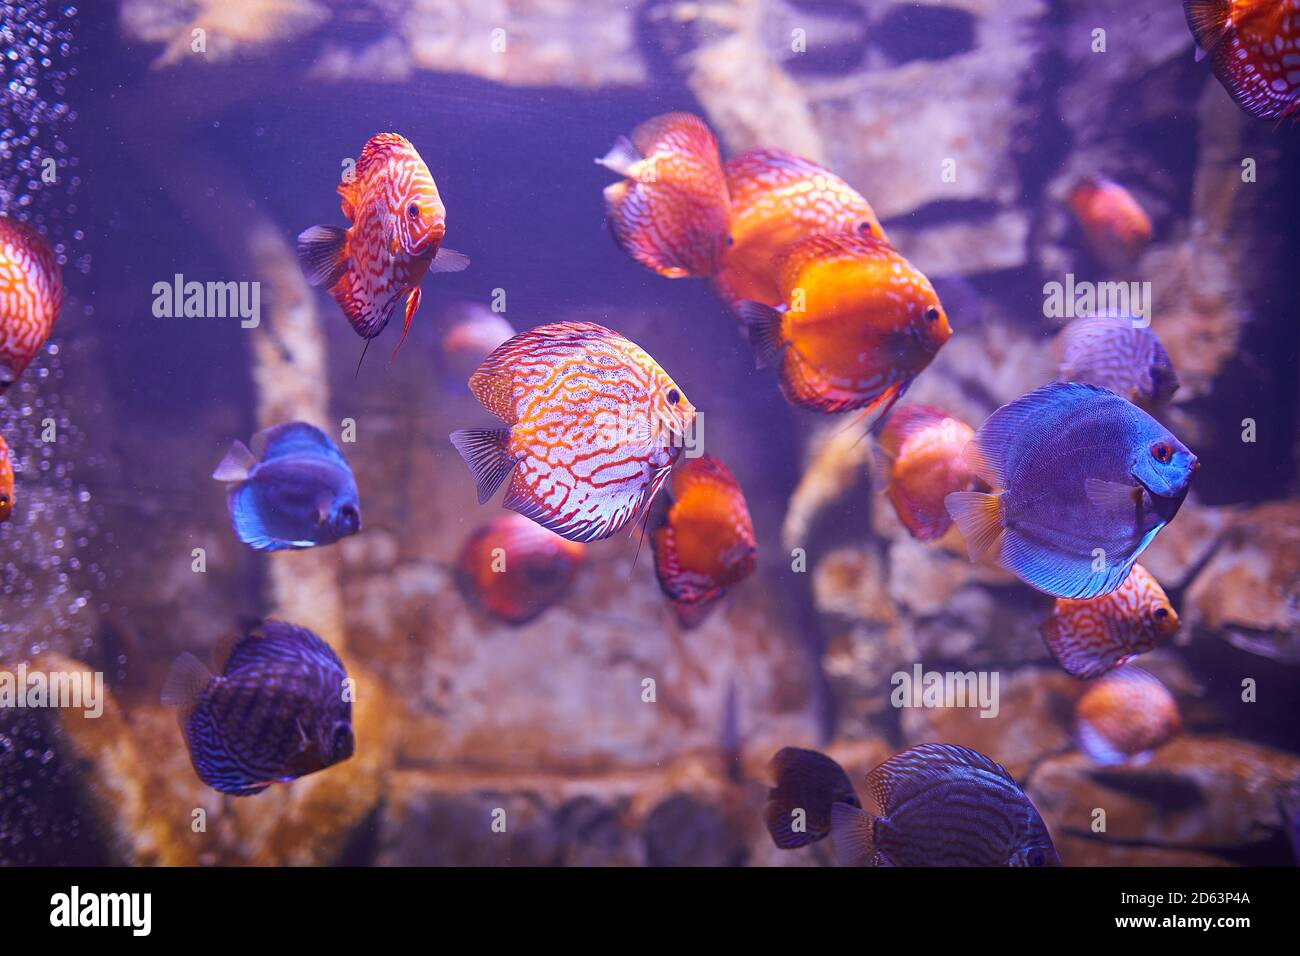 Colorful Discus fish in aquarium, tropical fish. Symphysodon